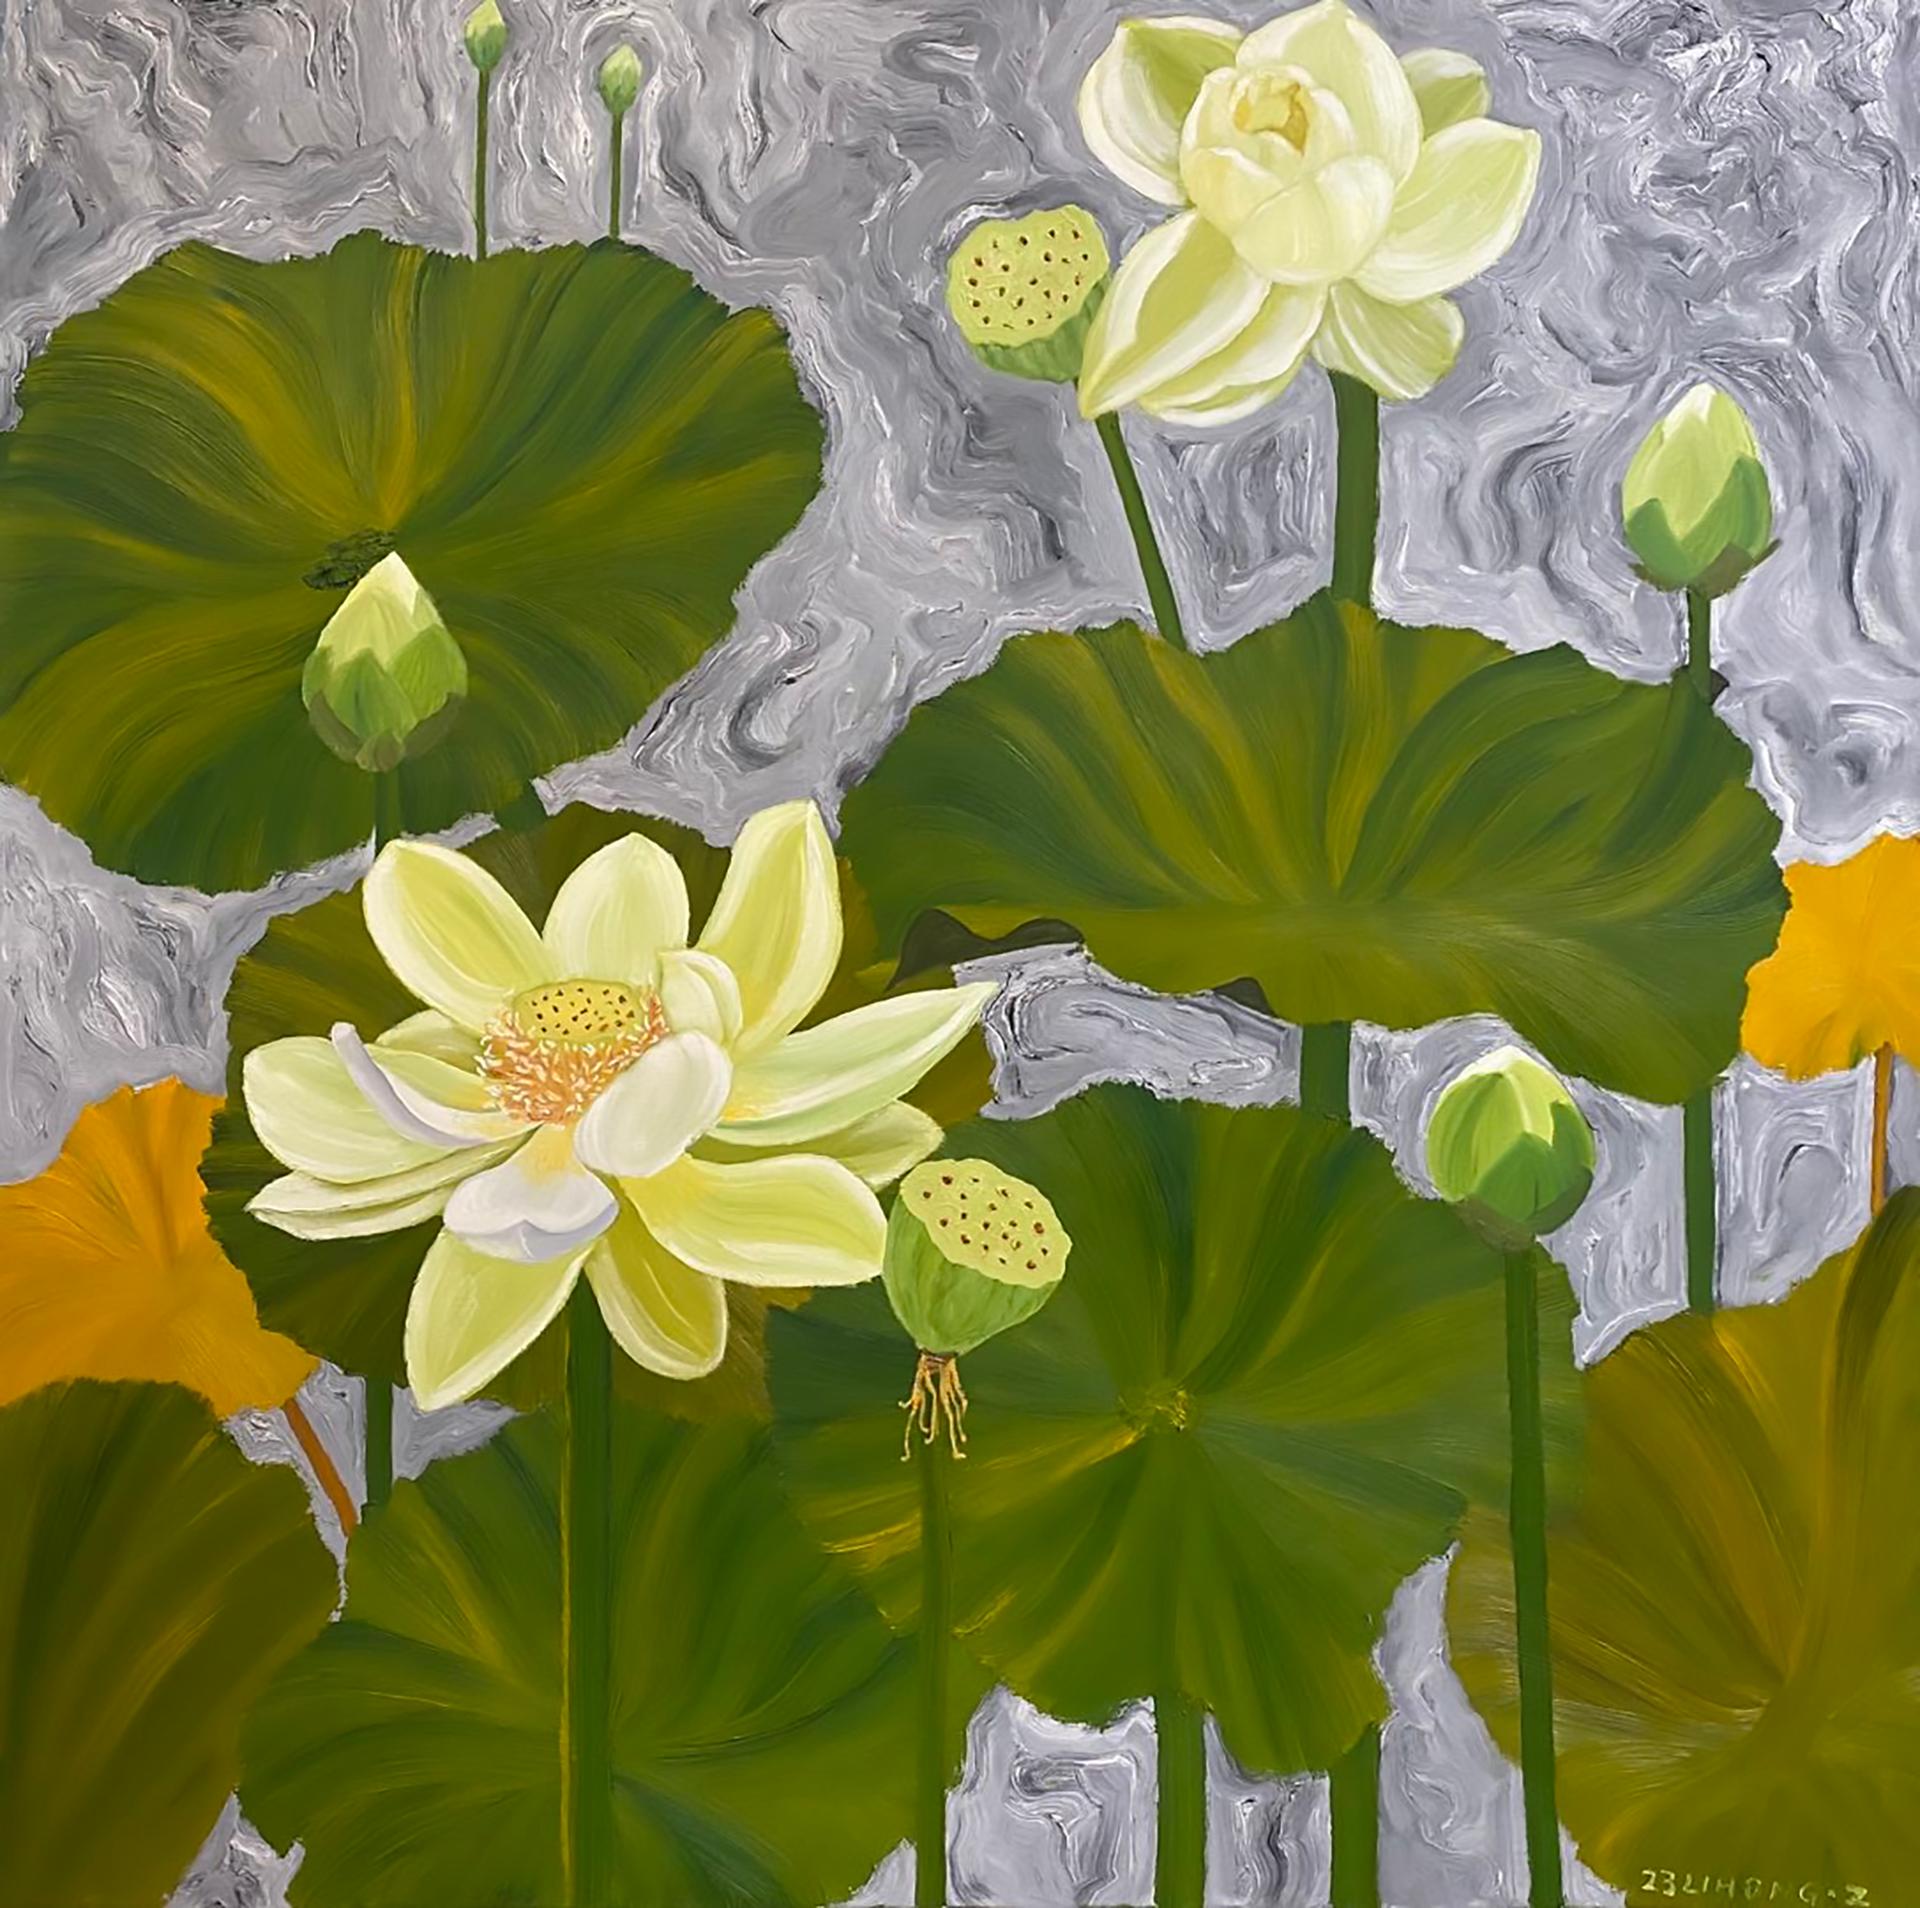 Lihong Zhang Interior Painting - The Lotus Series No. 42